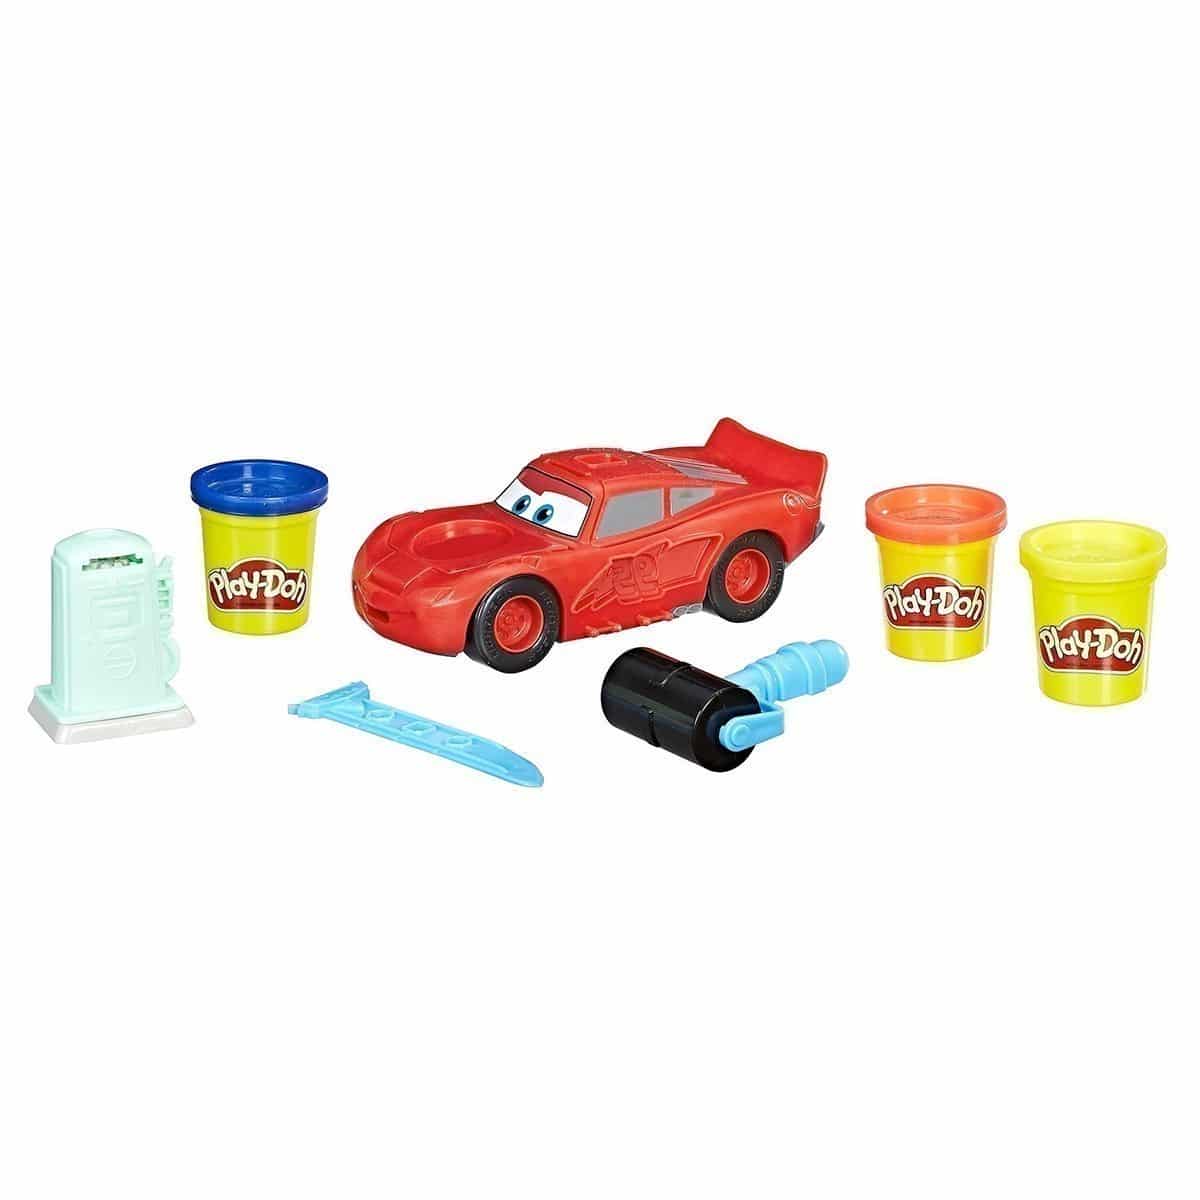 Play-Doh - Disney-Pixar Cars - Lightning McQueen Playset